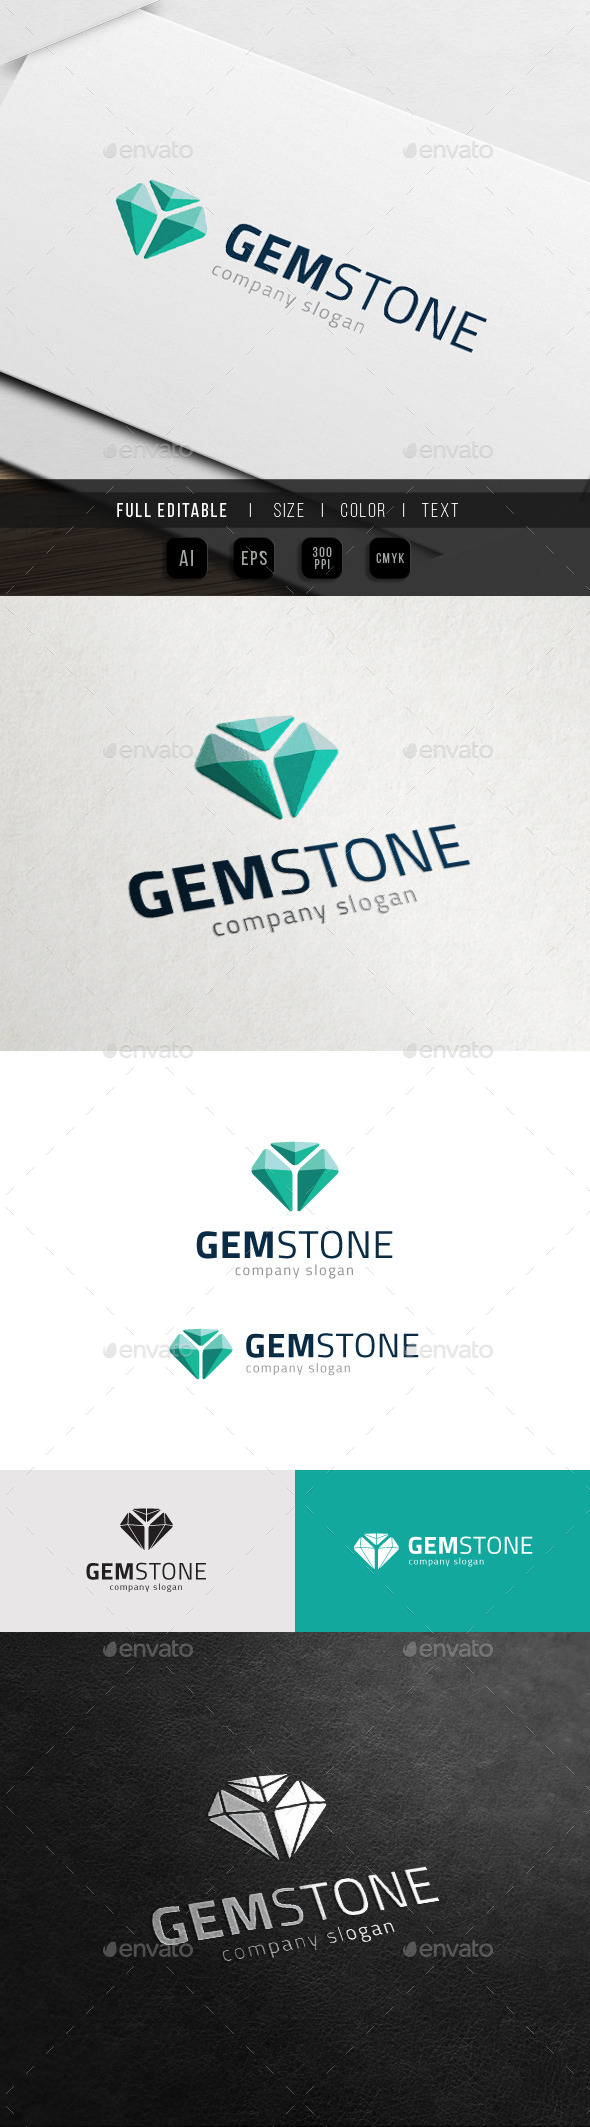 Gem Stone Game - Jewel Media Logo